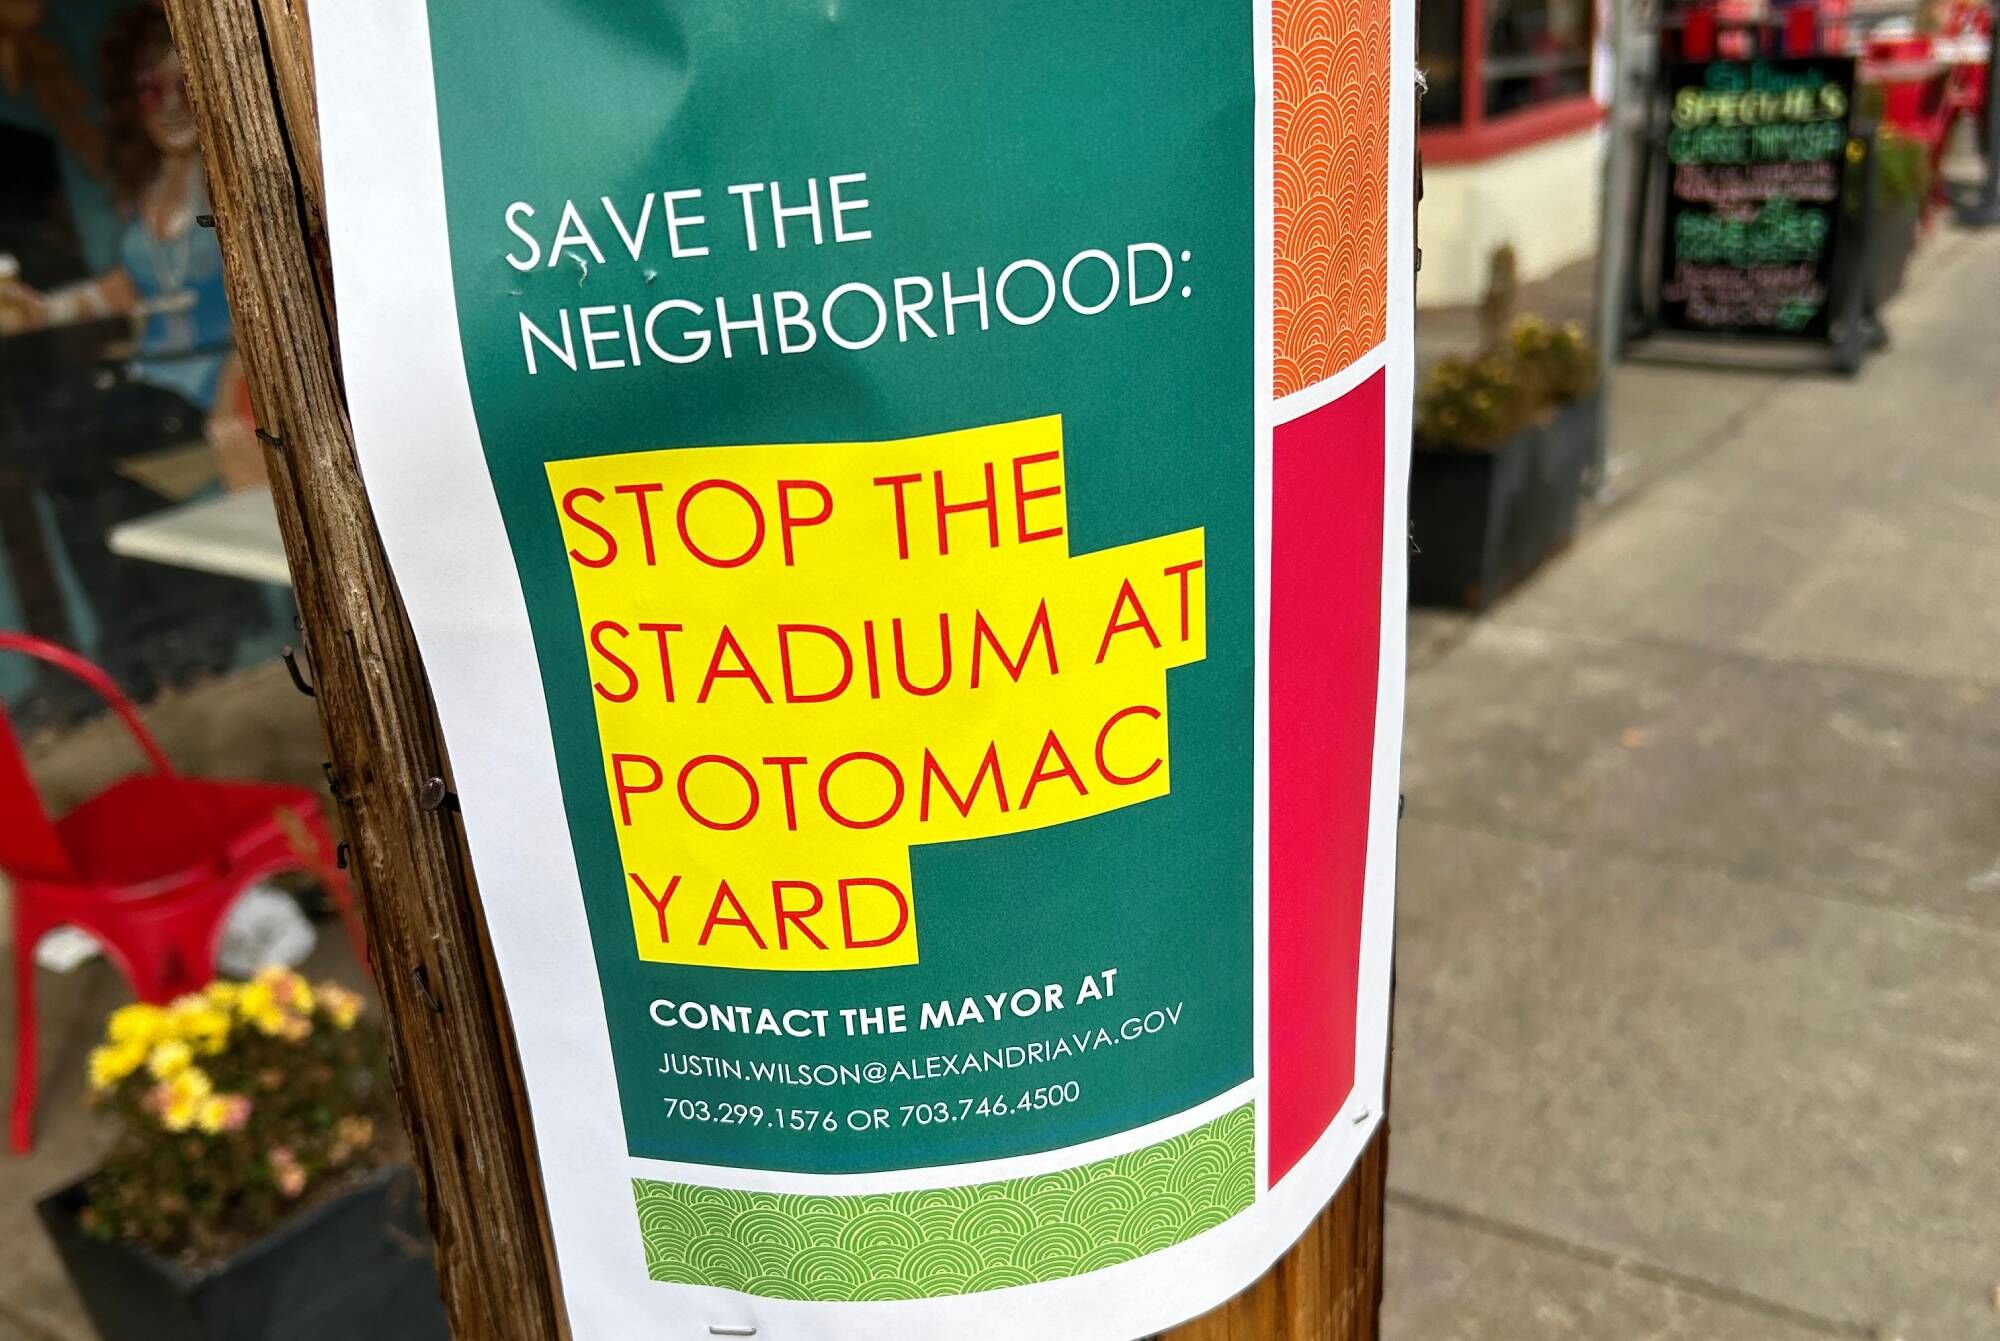 Stop the Stadium flyer